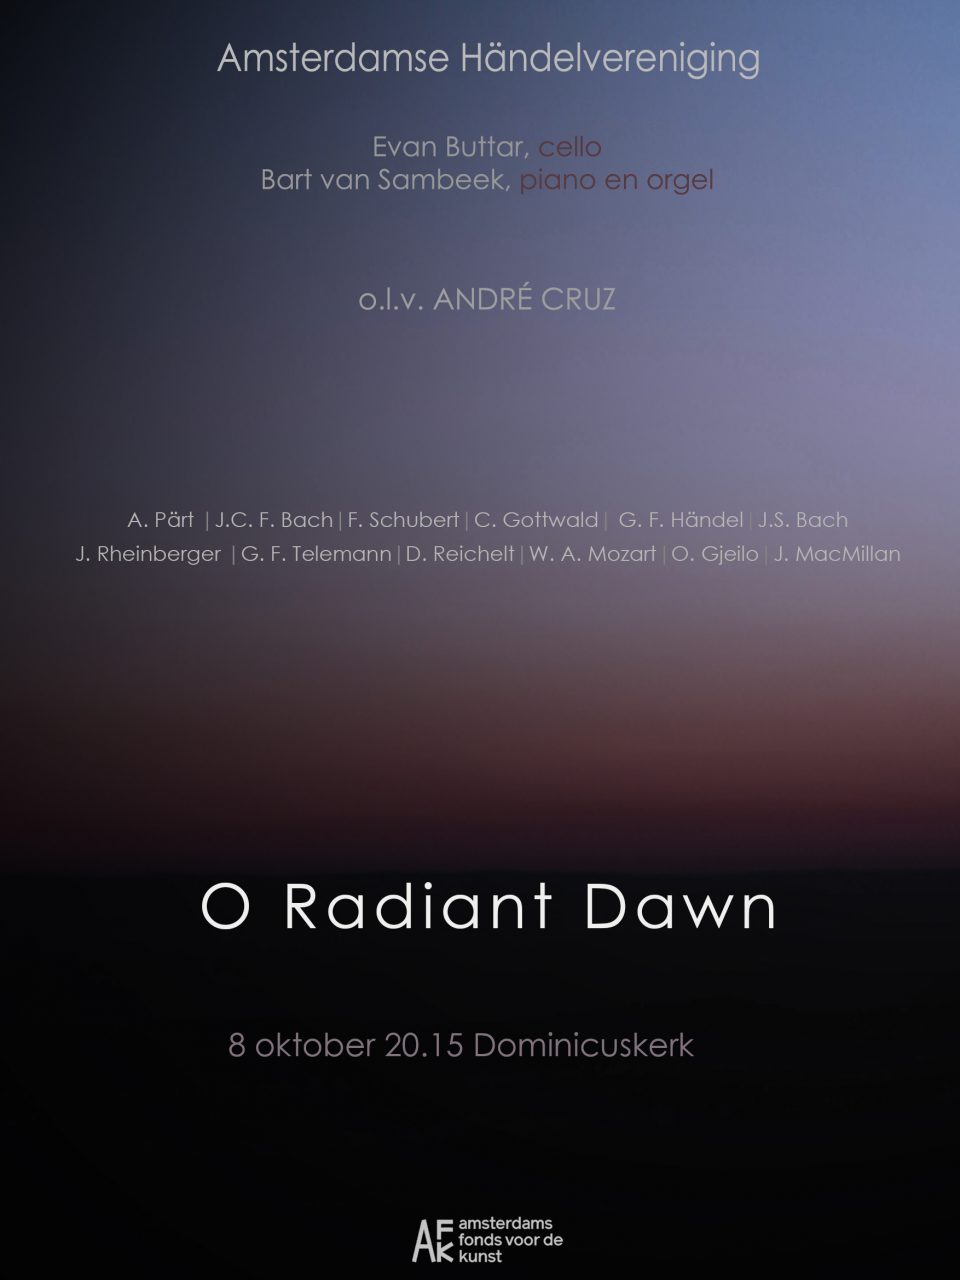 AHV - O radiant dawn - booklet cover